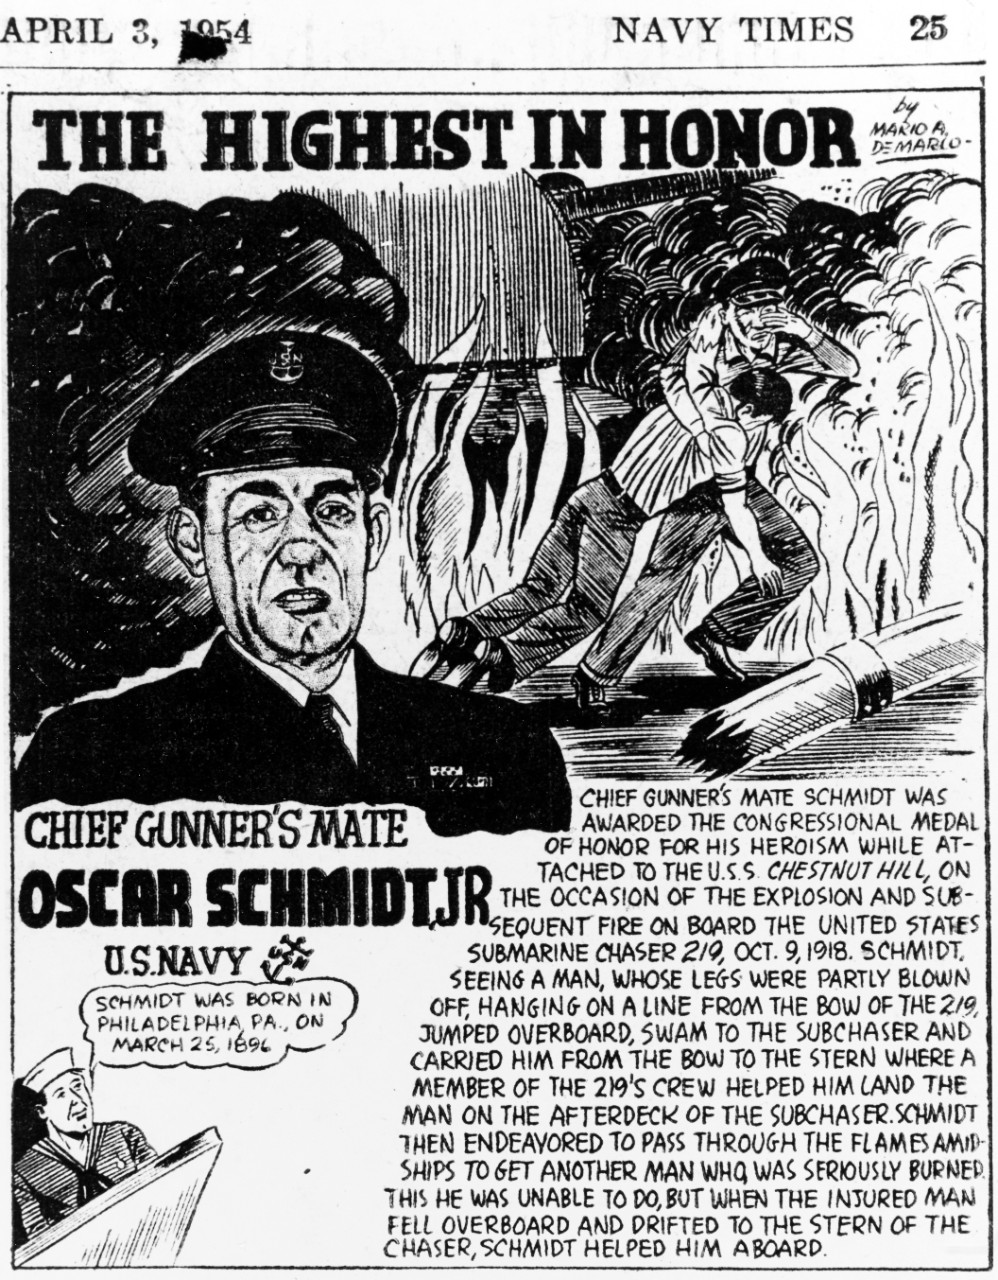 Oscar Schmidt, Jr., Chief Gunner's Mate, USN